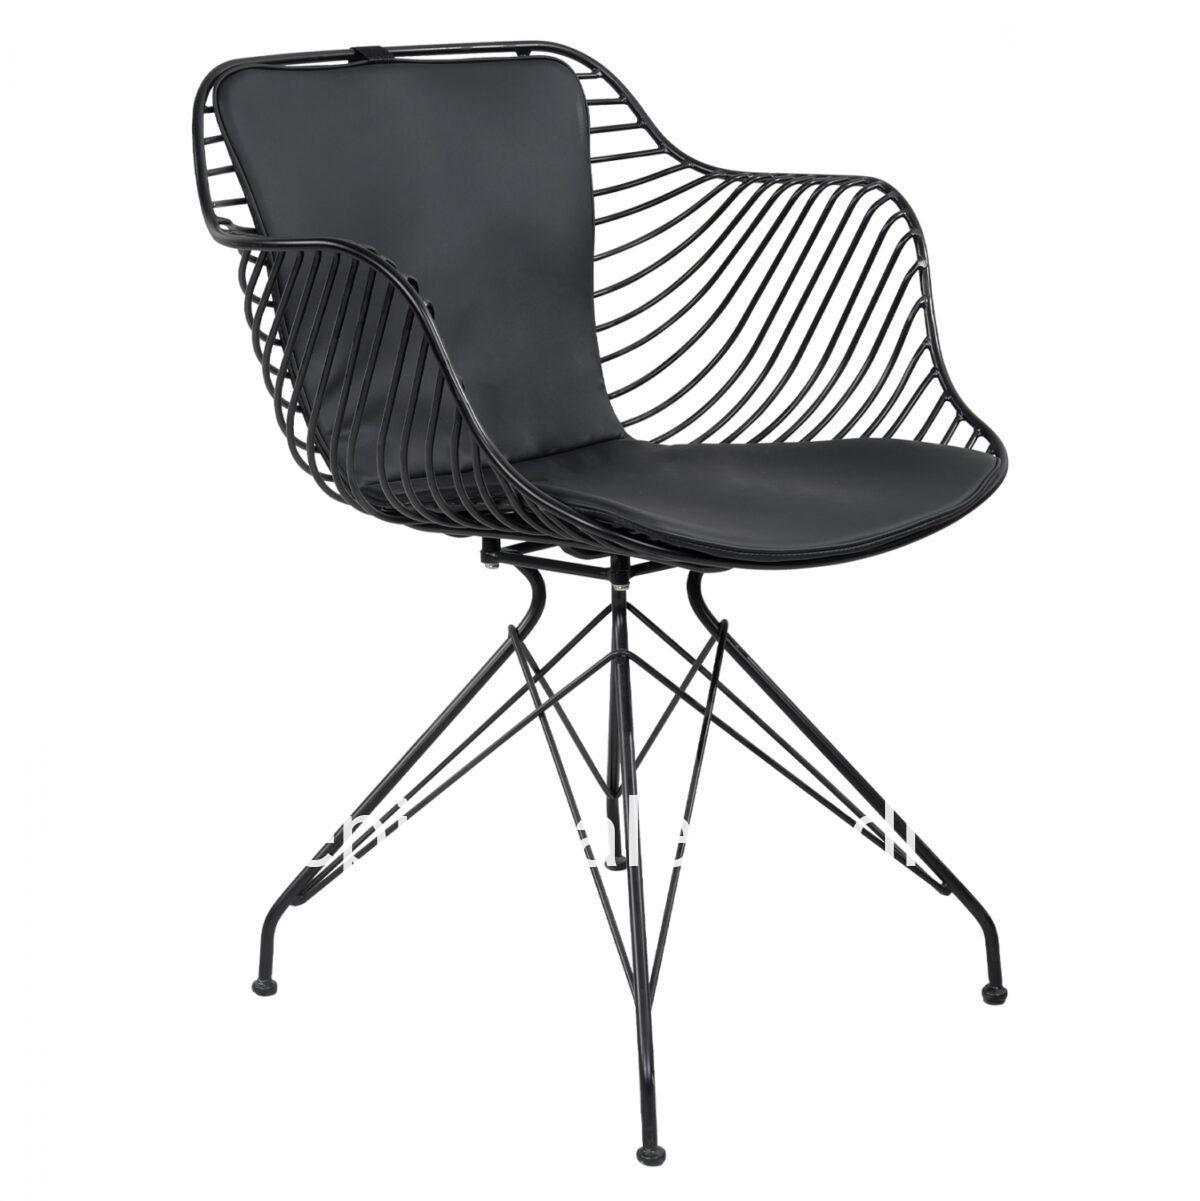 Chair Austin Metallic Black with PU Black Pillow HM8564.01